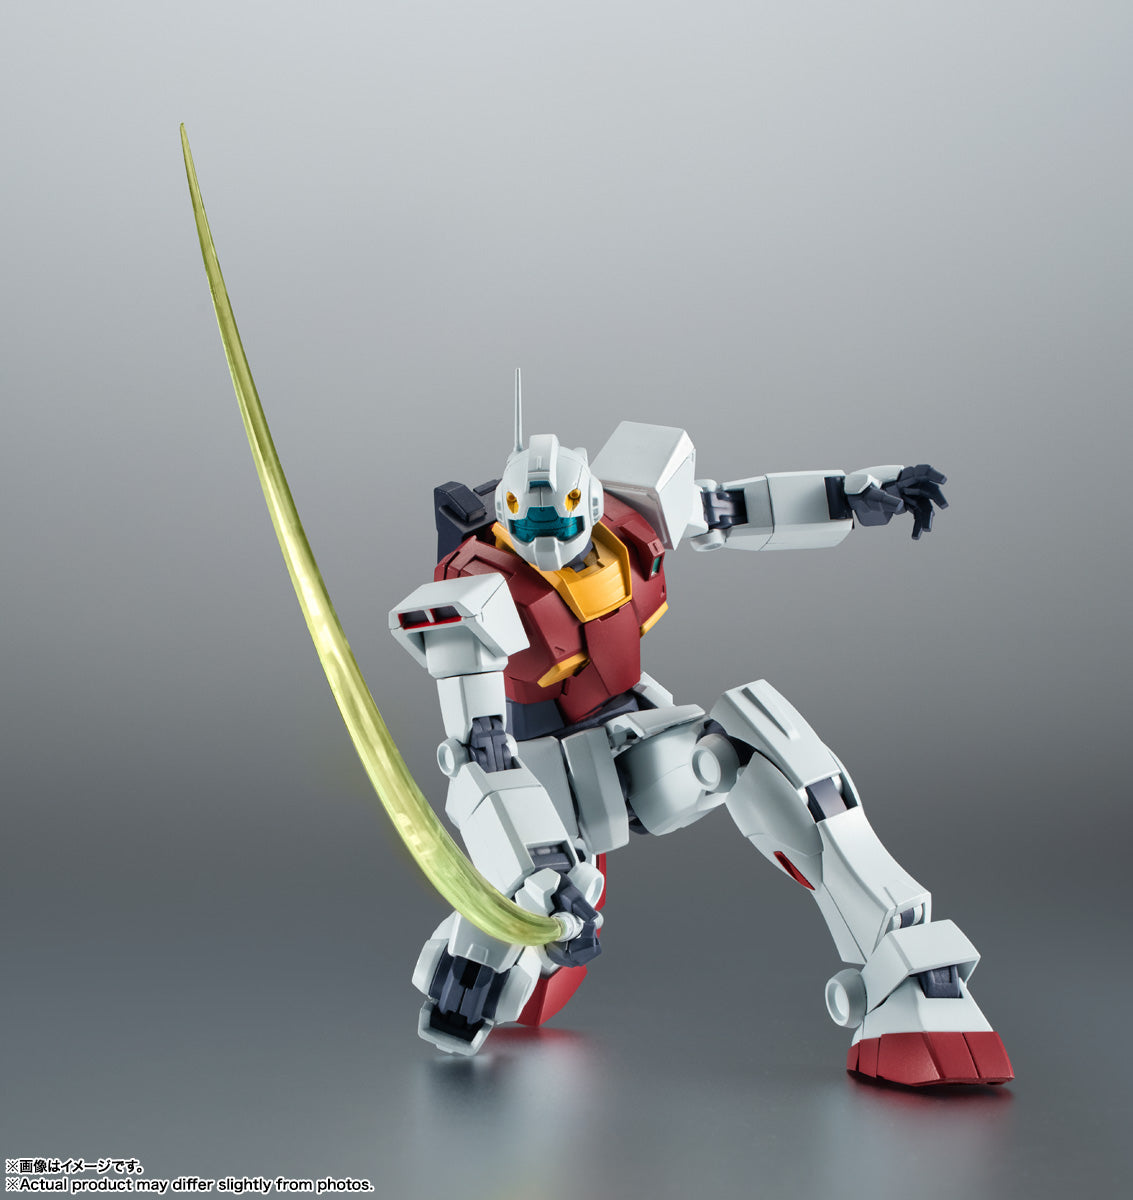 Robot Spirits Side MS "Mobile Suit Zeta Gundam" RMS-179 GM II (E.F.S.F. Model) Ver. A.N.I.M.E.